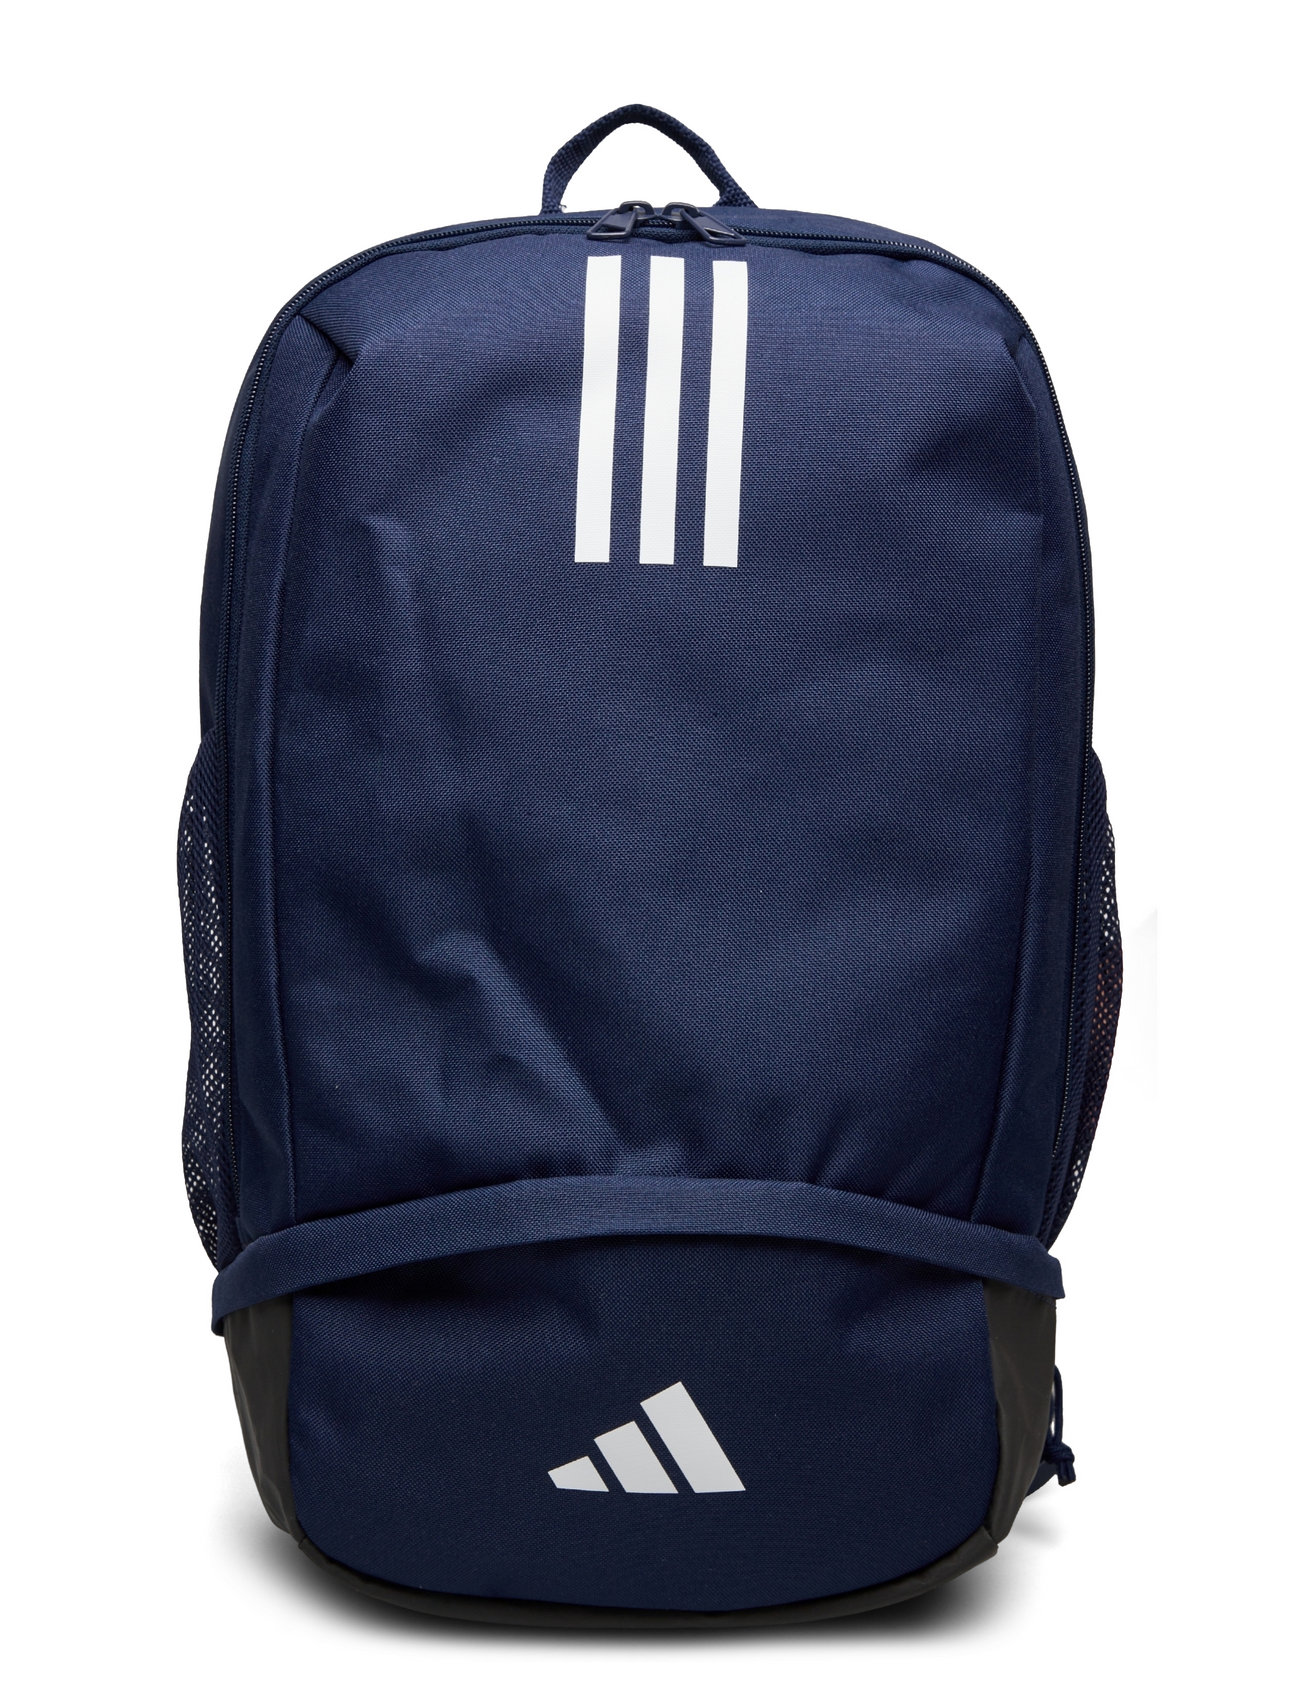 "adidas Performance" "Tiro L Backpack Sport Backpacks Navy Adidas